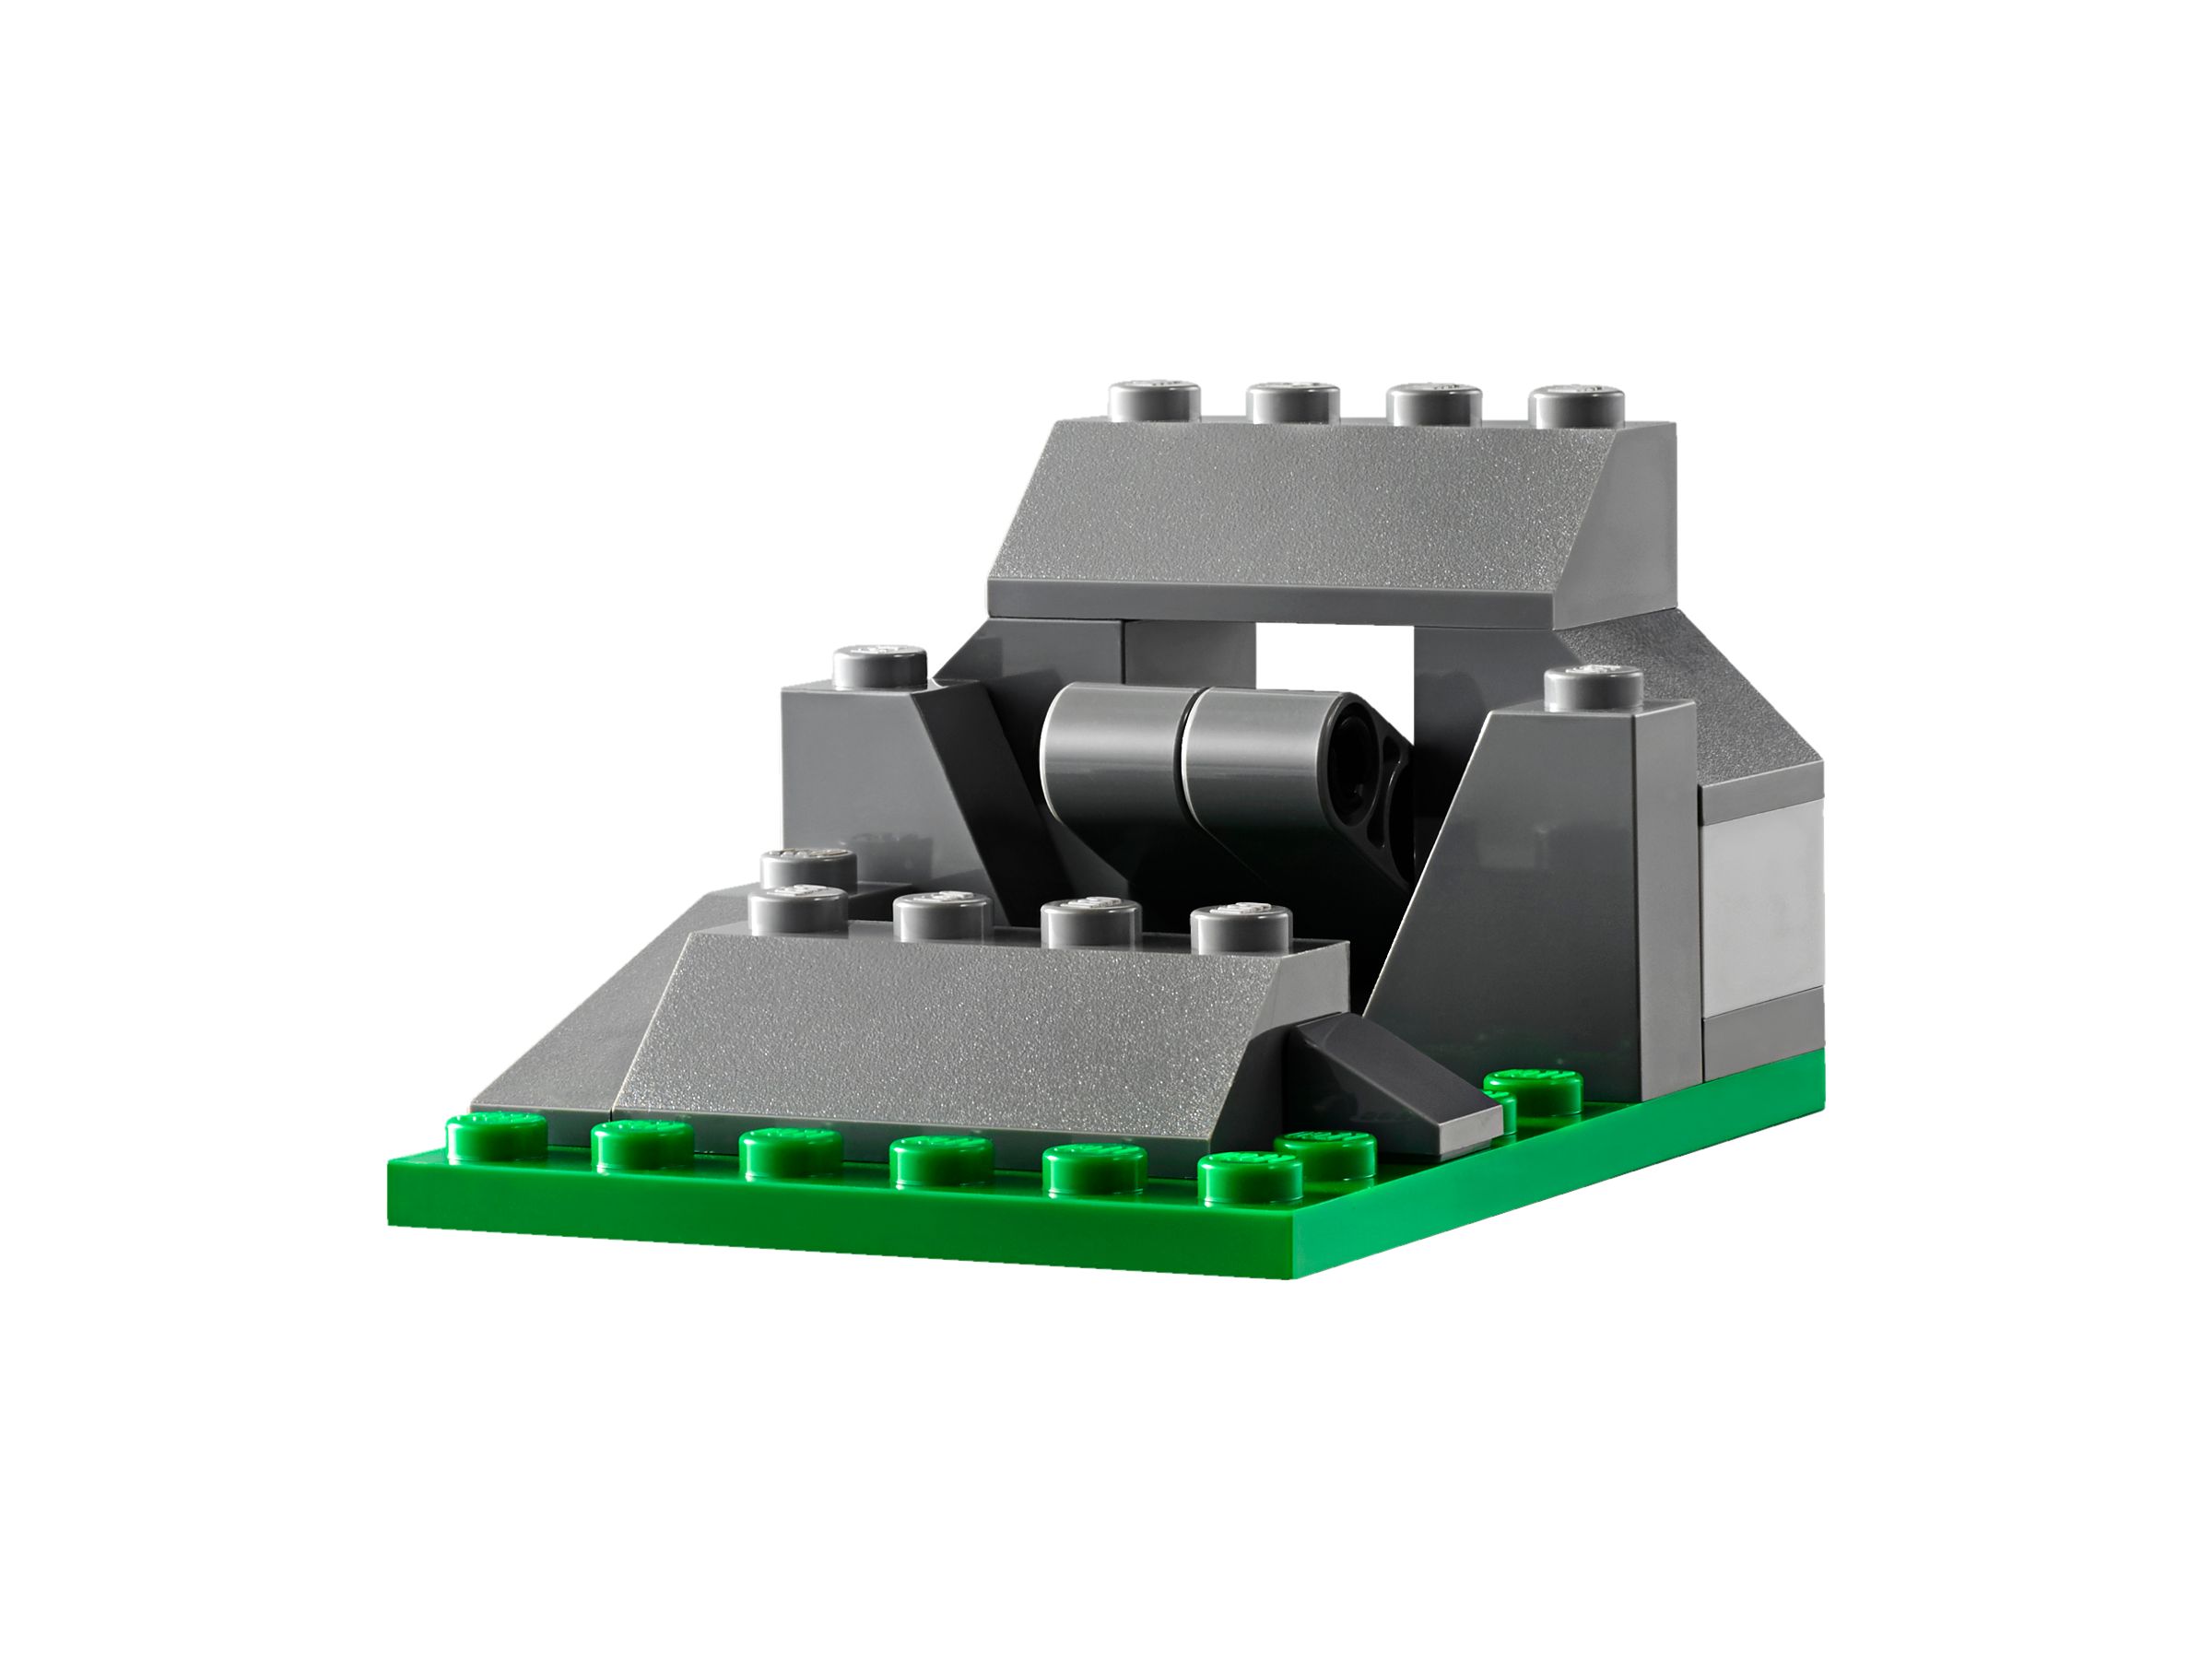 LEGO City 60172 Verfolgungsjagd auf Schotterpisten LEGO_60172_alt5.jpg